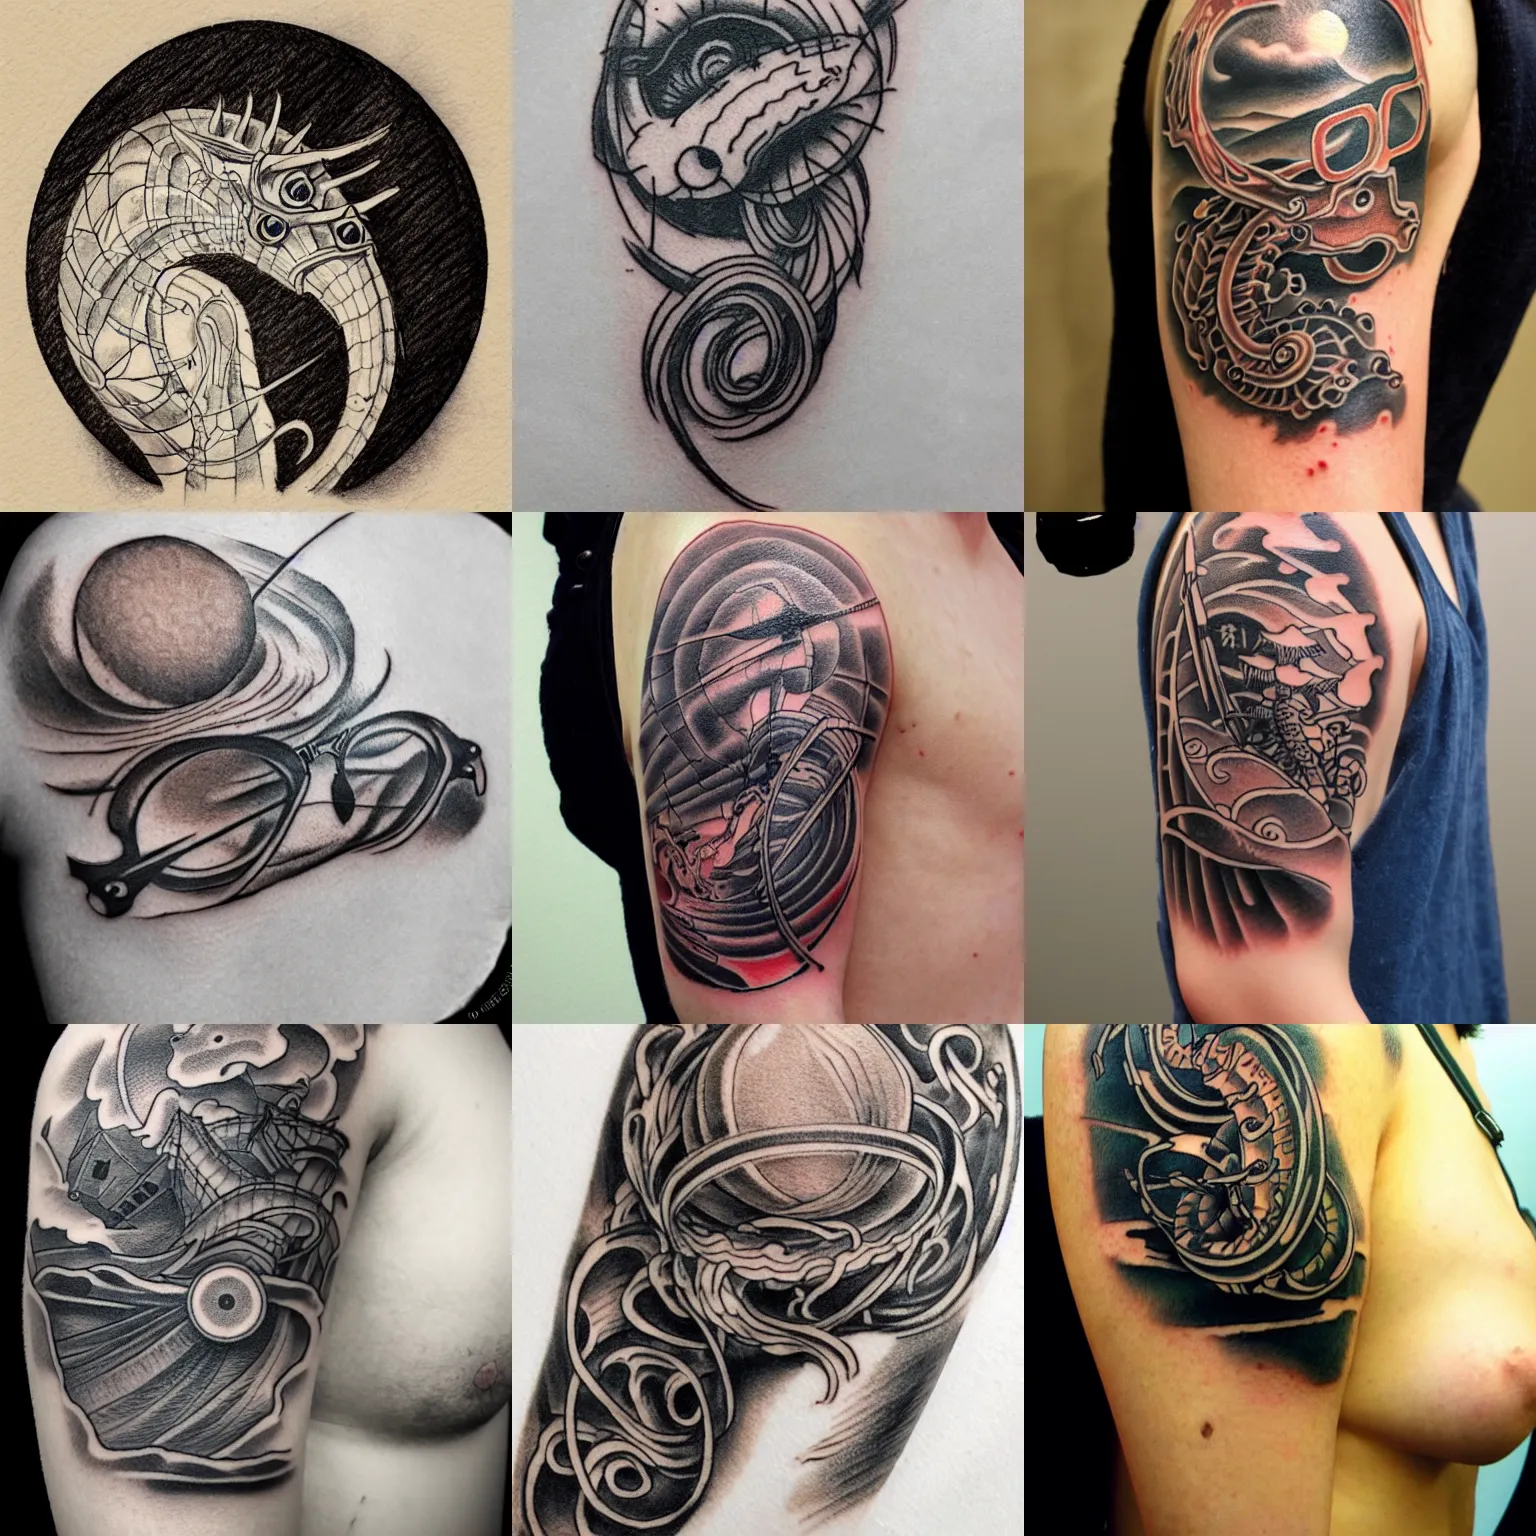 Chest Half Sleeve Tattoo Designs - Best Tattoo Ideas Gallery